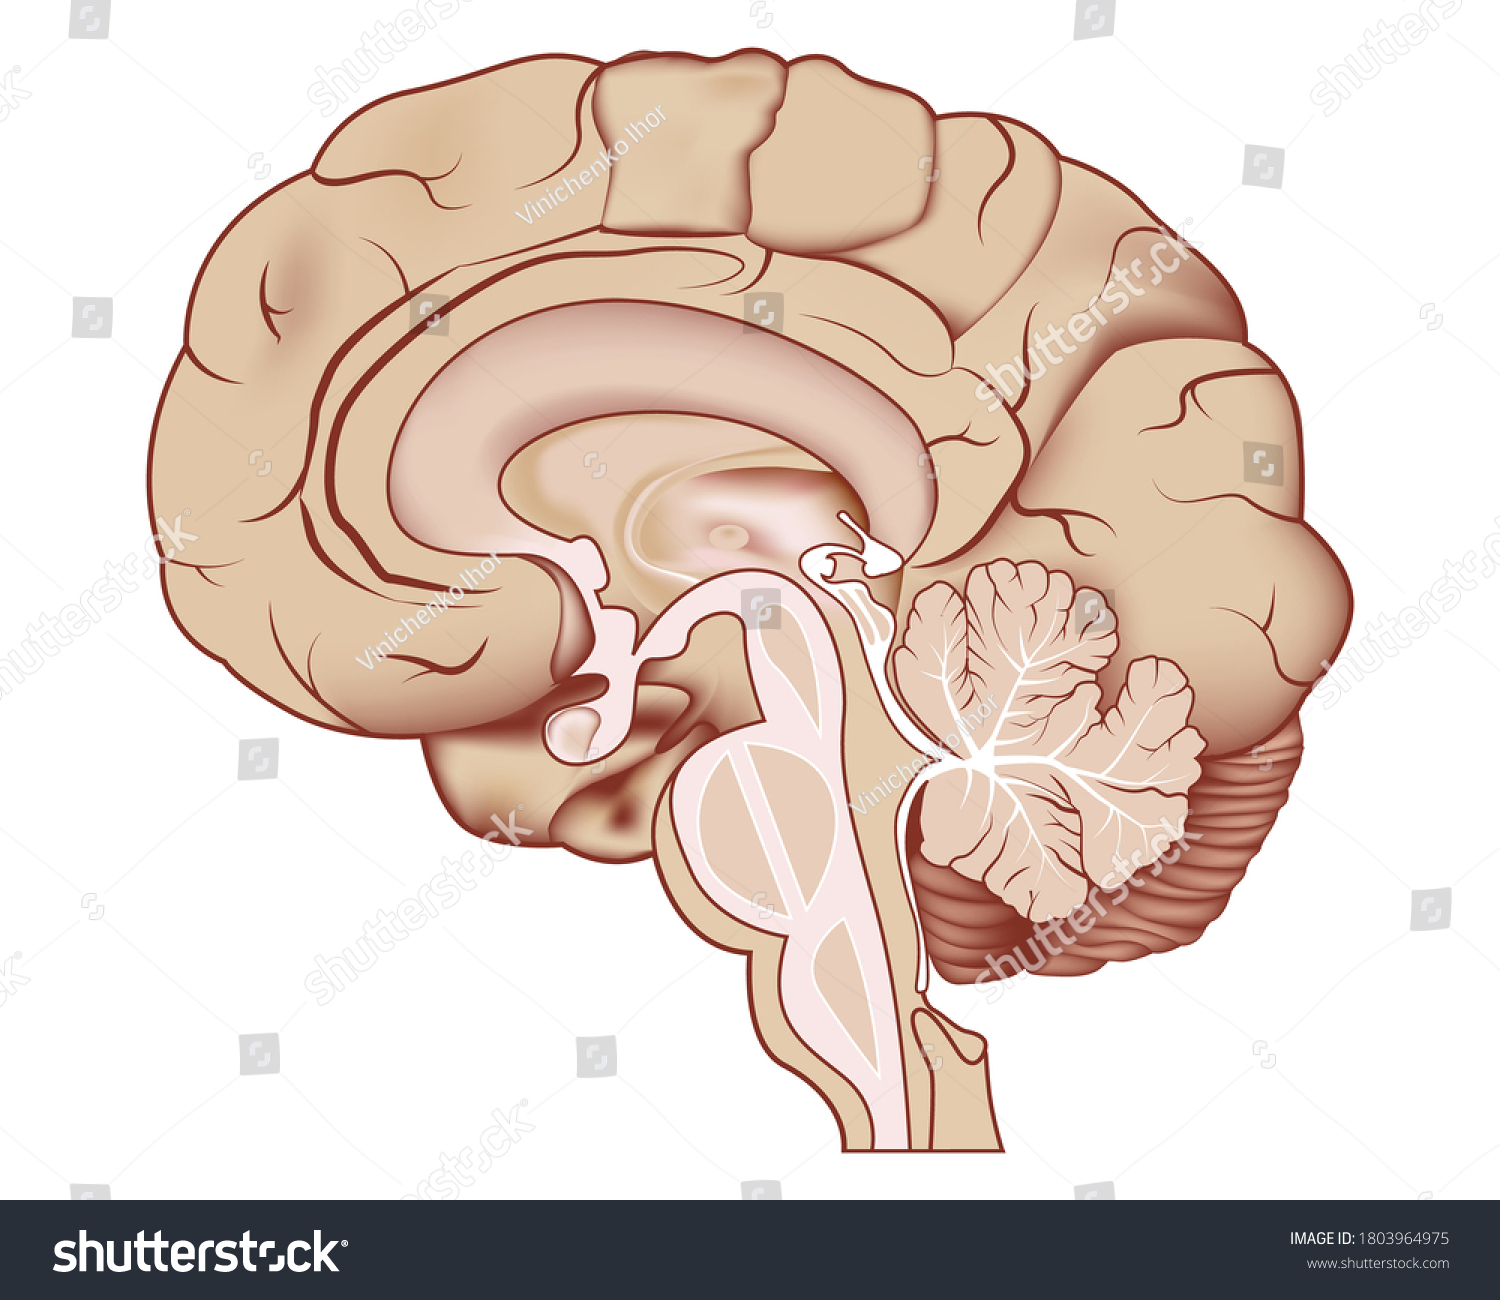 SVG of Parts of the human brain. Vector illustration. Medical illustration. svg